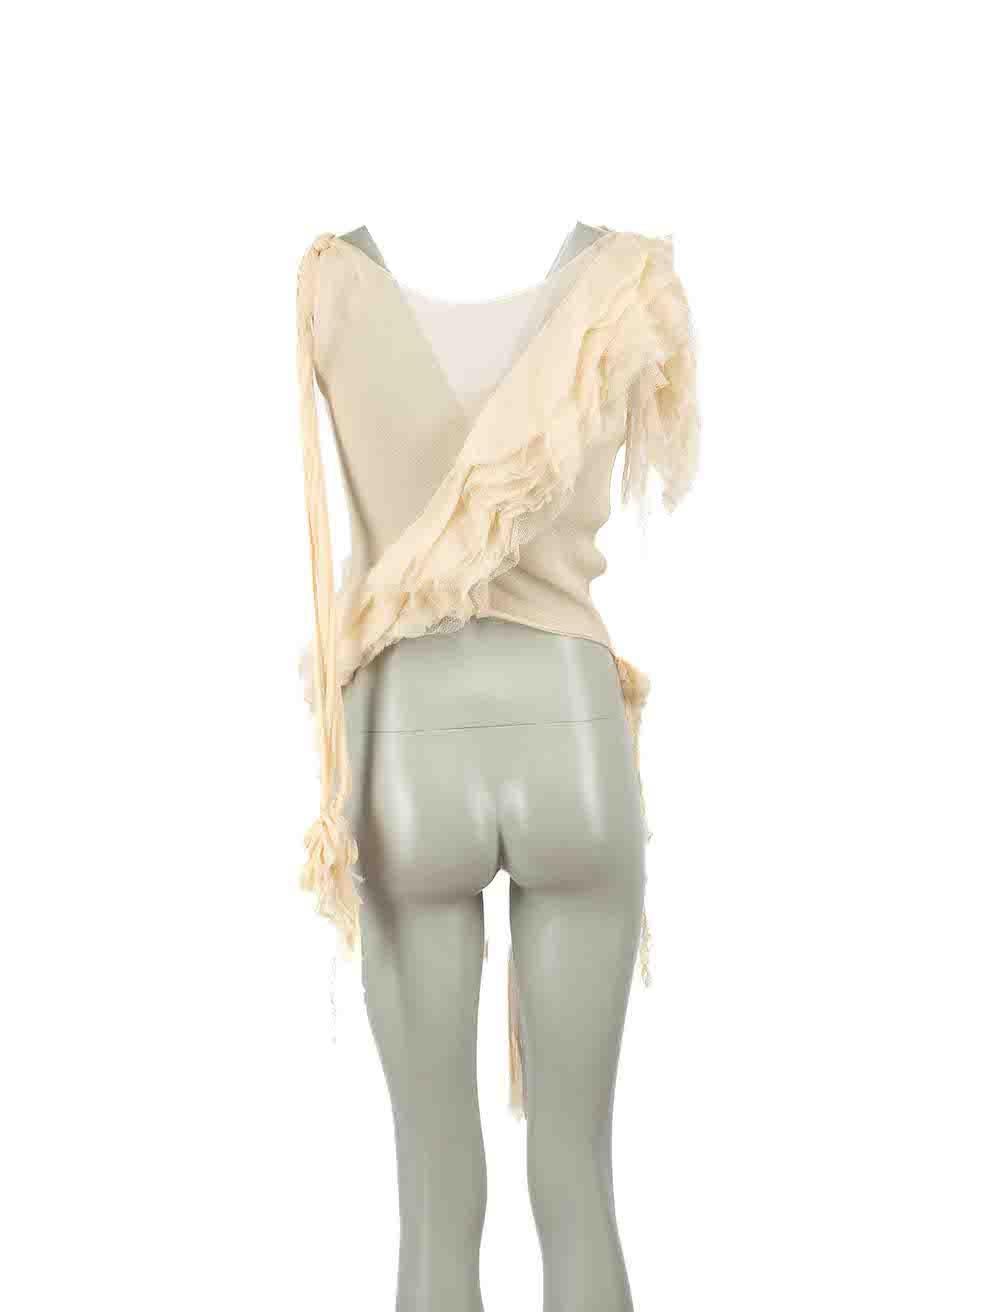 Beige Alexander McQueen Vintage S/S 2003 Ecru Silk Top Size M